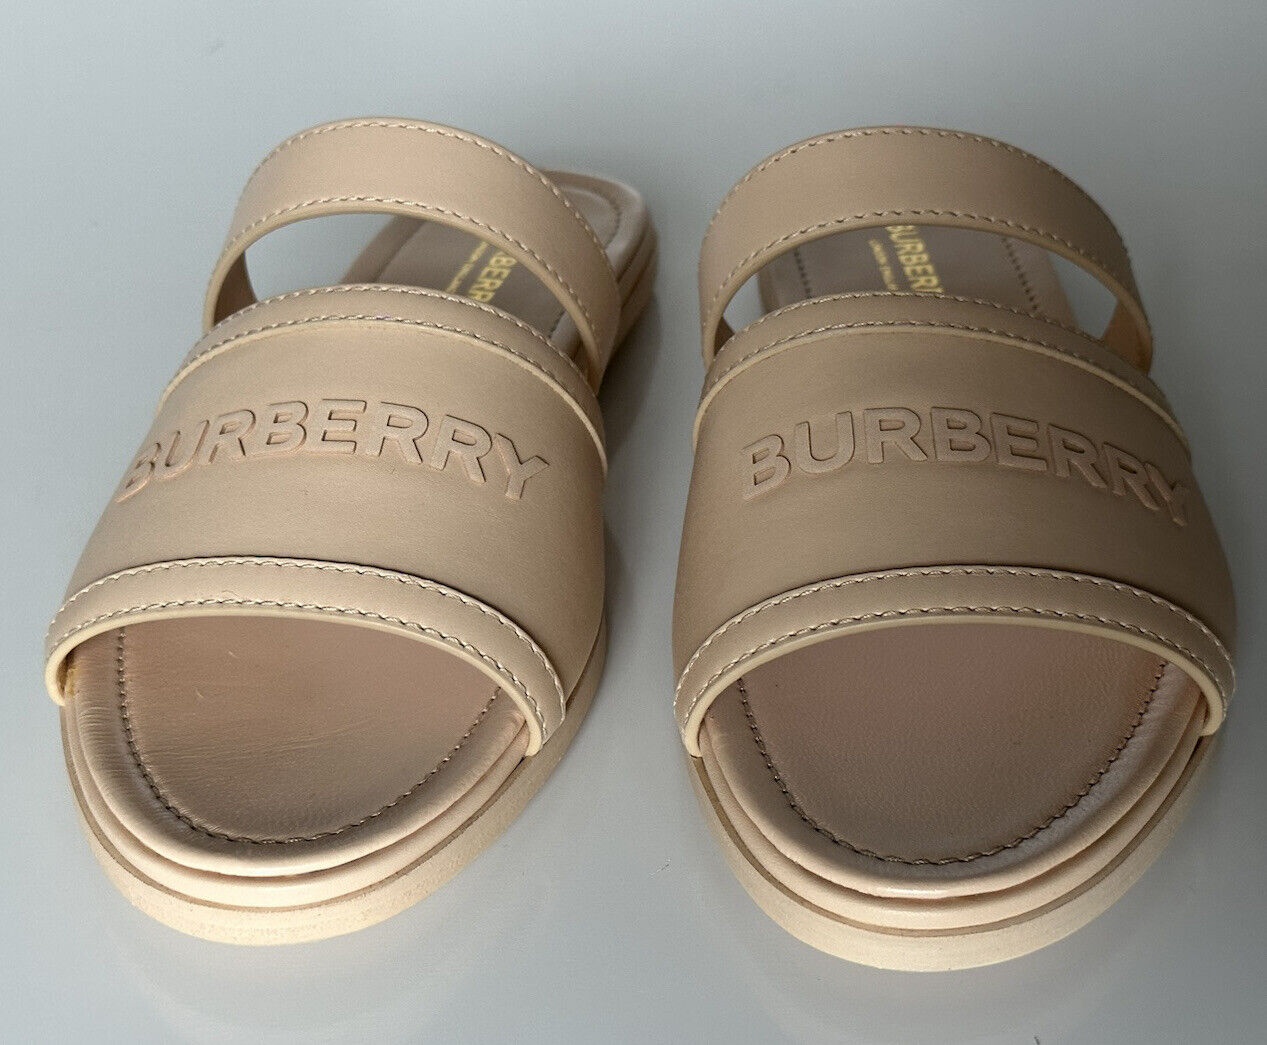 NIB Burberry Open Toe Women's Peach Leather Slides Sandals 7.5 (37.5) 8047843 IT